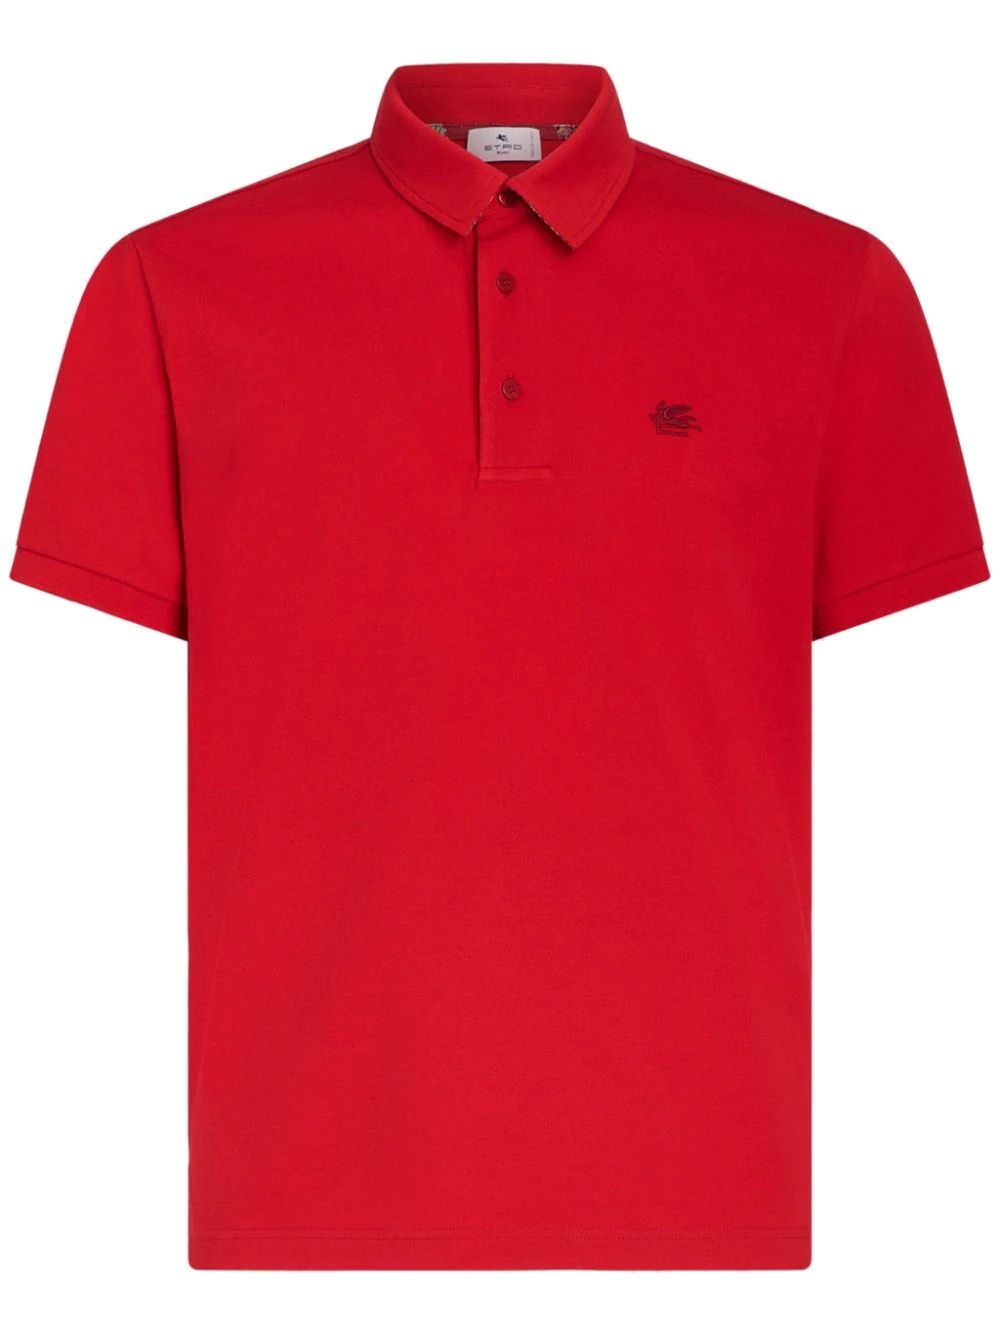 Red cotton polo shirt